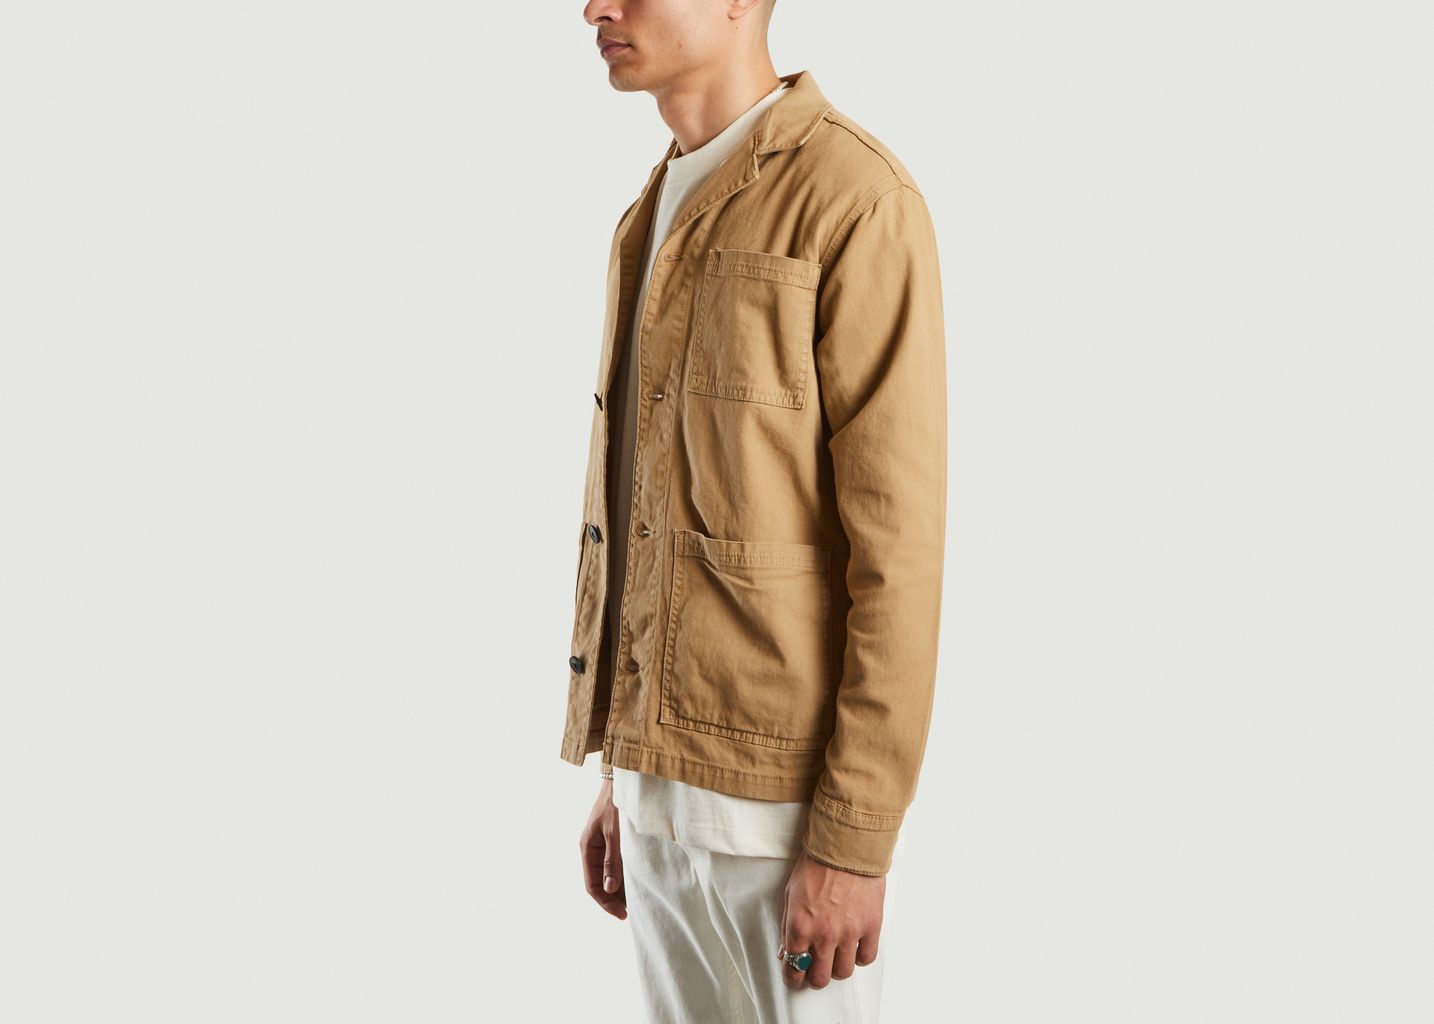 Pine Jacket aus GOTS-zertifizierter Baumwolle - KCA